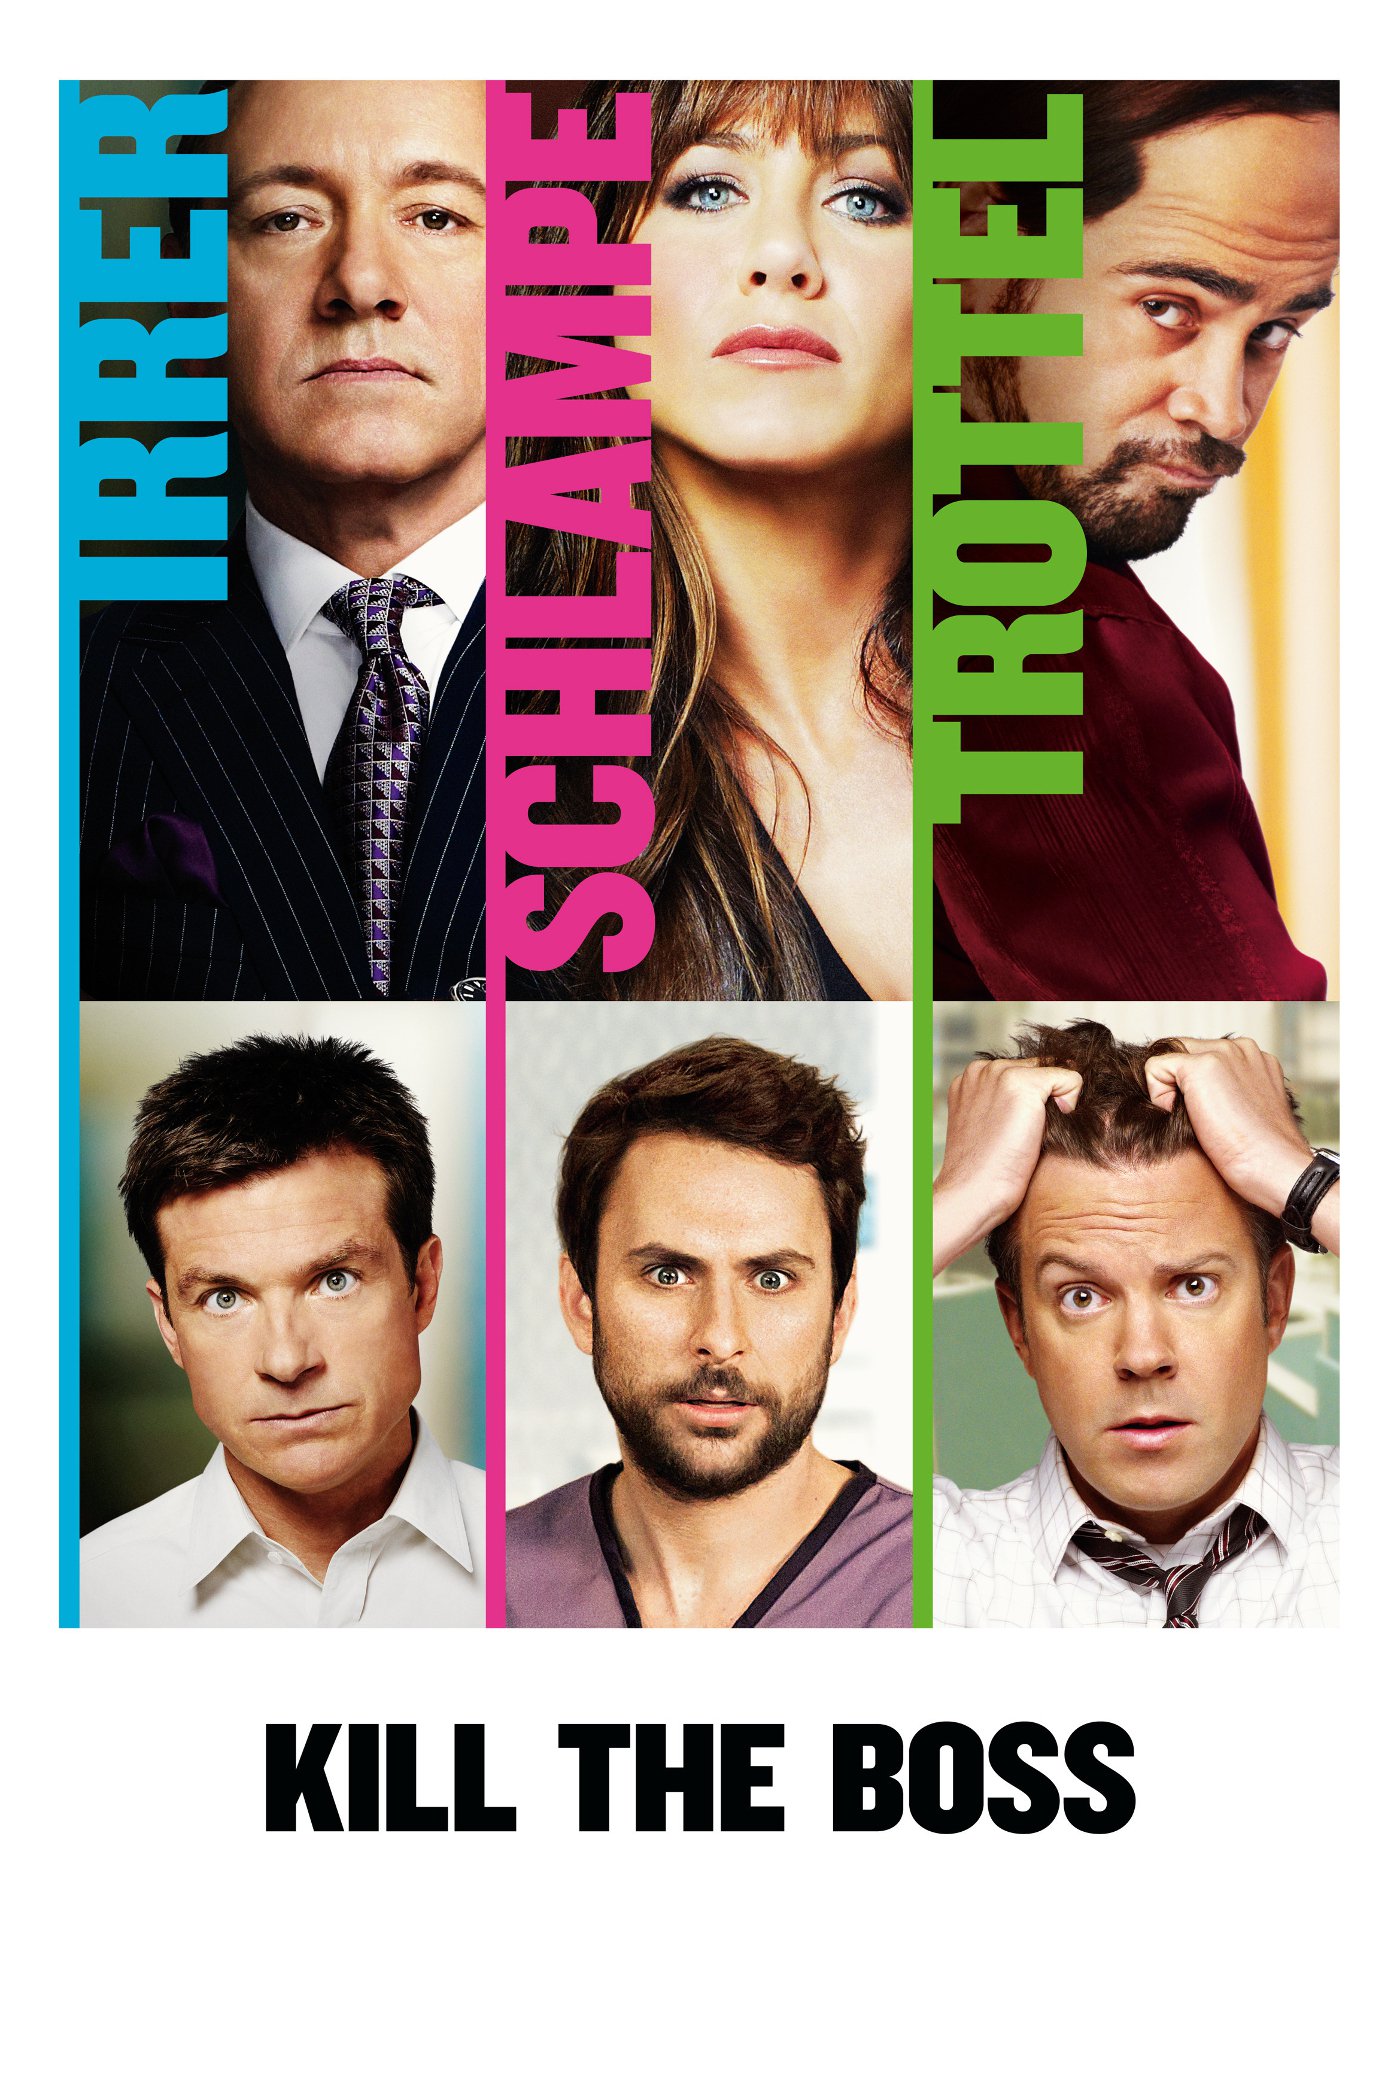 Plakat von "Kill the Boss"